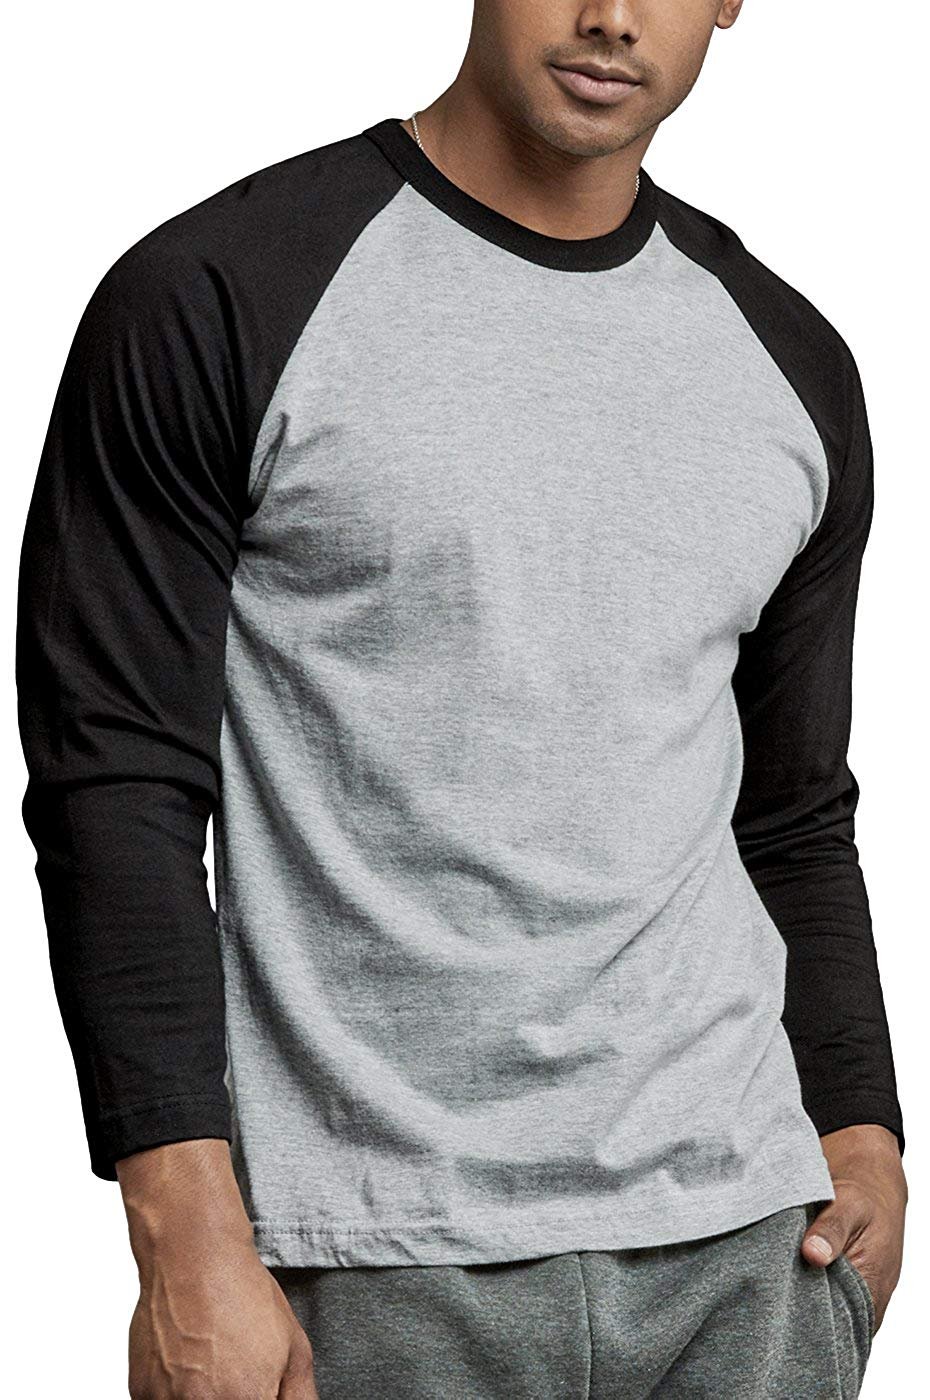 DailyWear Mens Casual Long Sleeve Plain Baseball Cotton T Shirts Black/LT.Grey, 2Xlarge - image 1 of 4